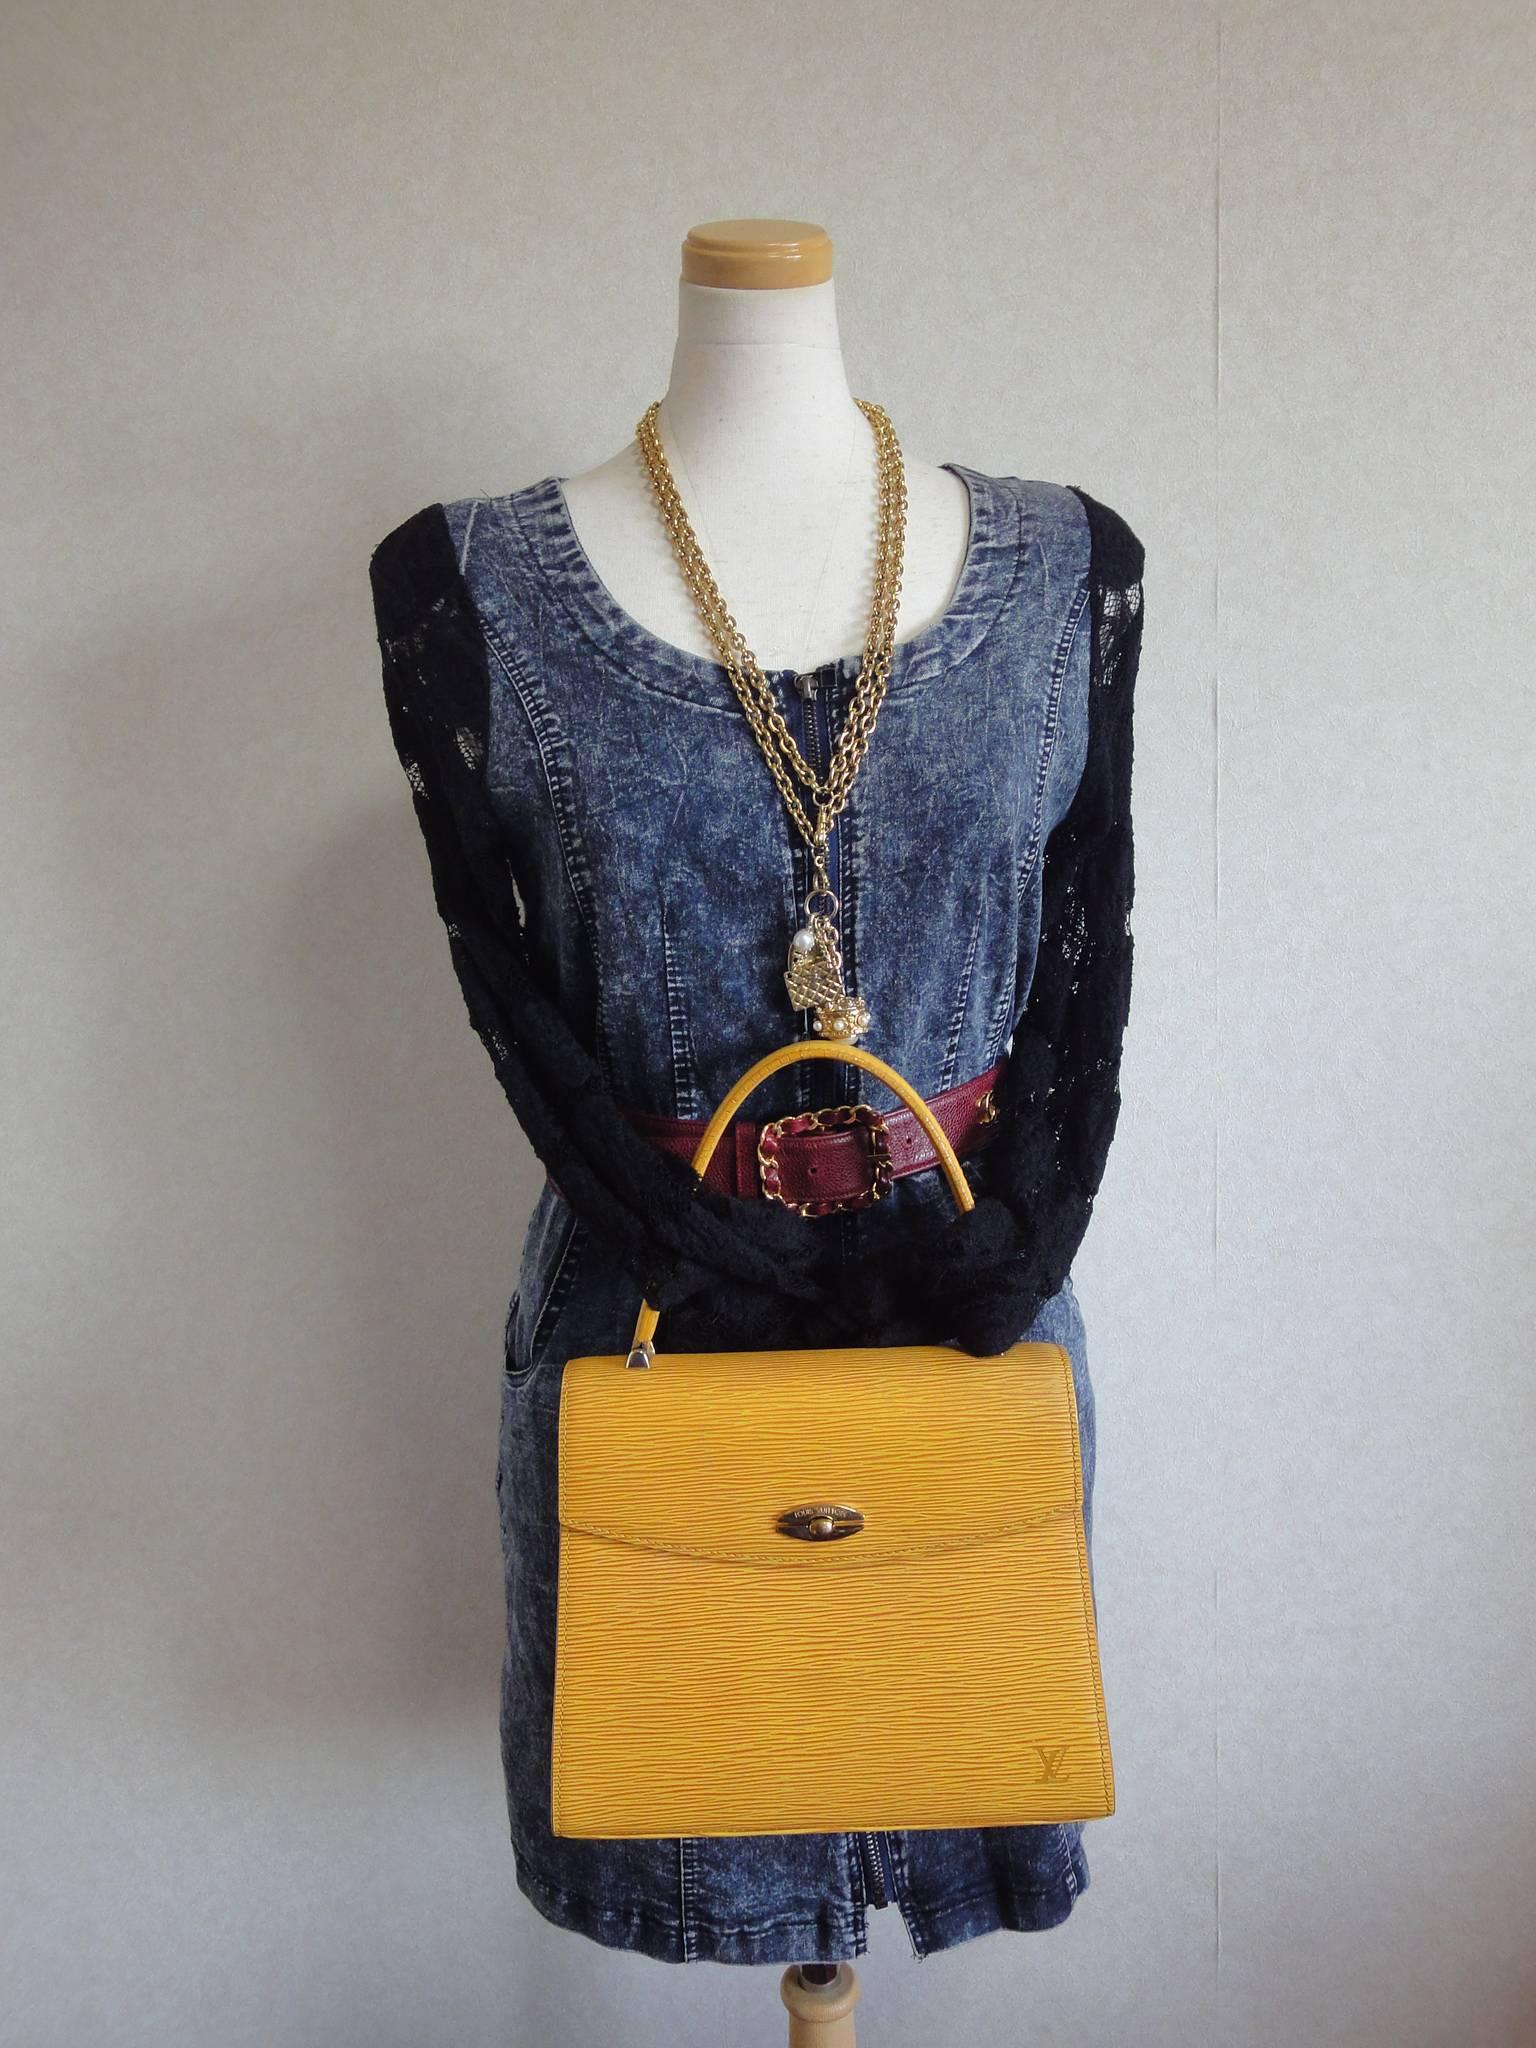 Vintage Louis Vuitton yellow epi Malesherbes handbag. Classic purse for Spring 2